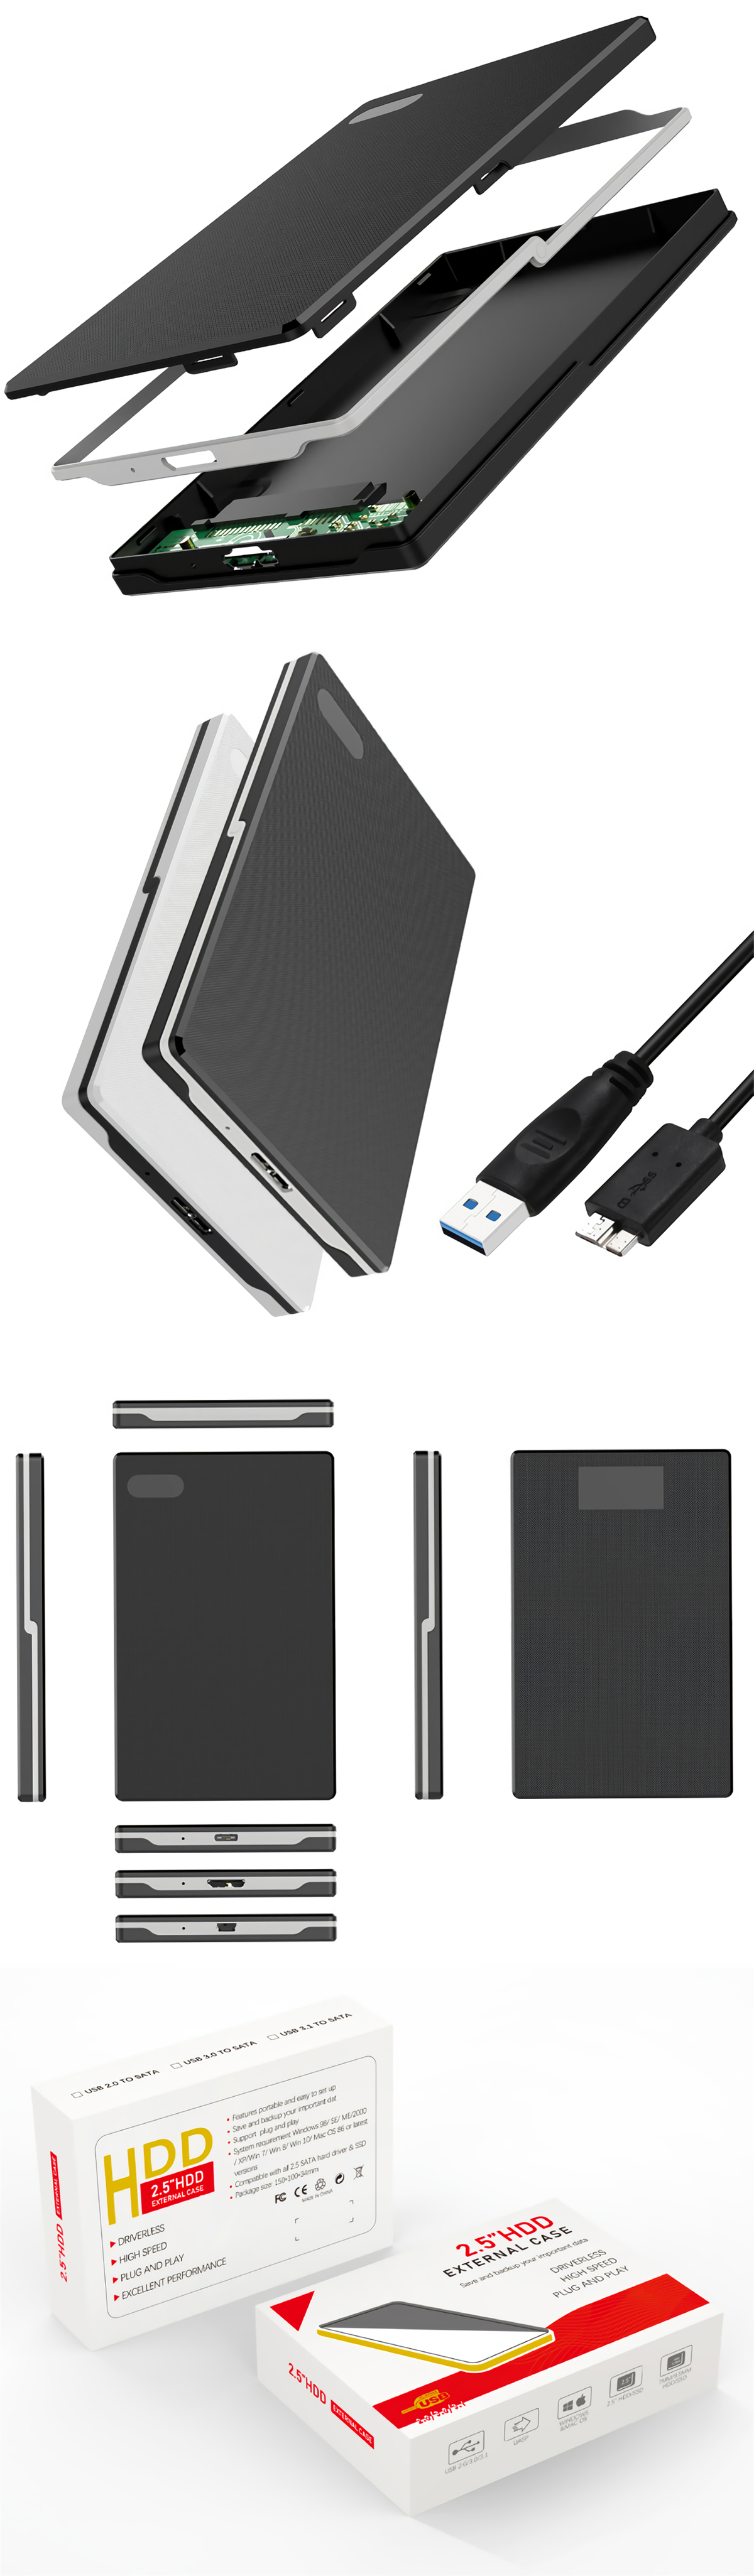 CIMANZ-CZL-U31S2502-25-inch-SSD-HDD-Enclosure-USB-30-to-SATA-Solid-State-Hard-Drive-Case-Mechanical--1661366-1